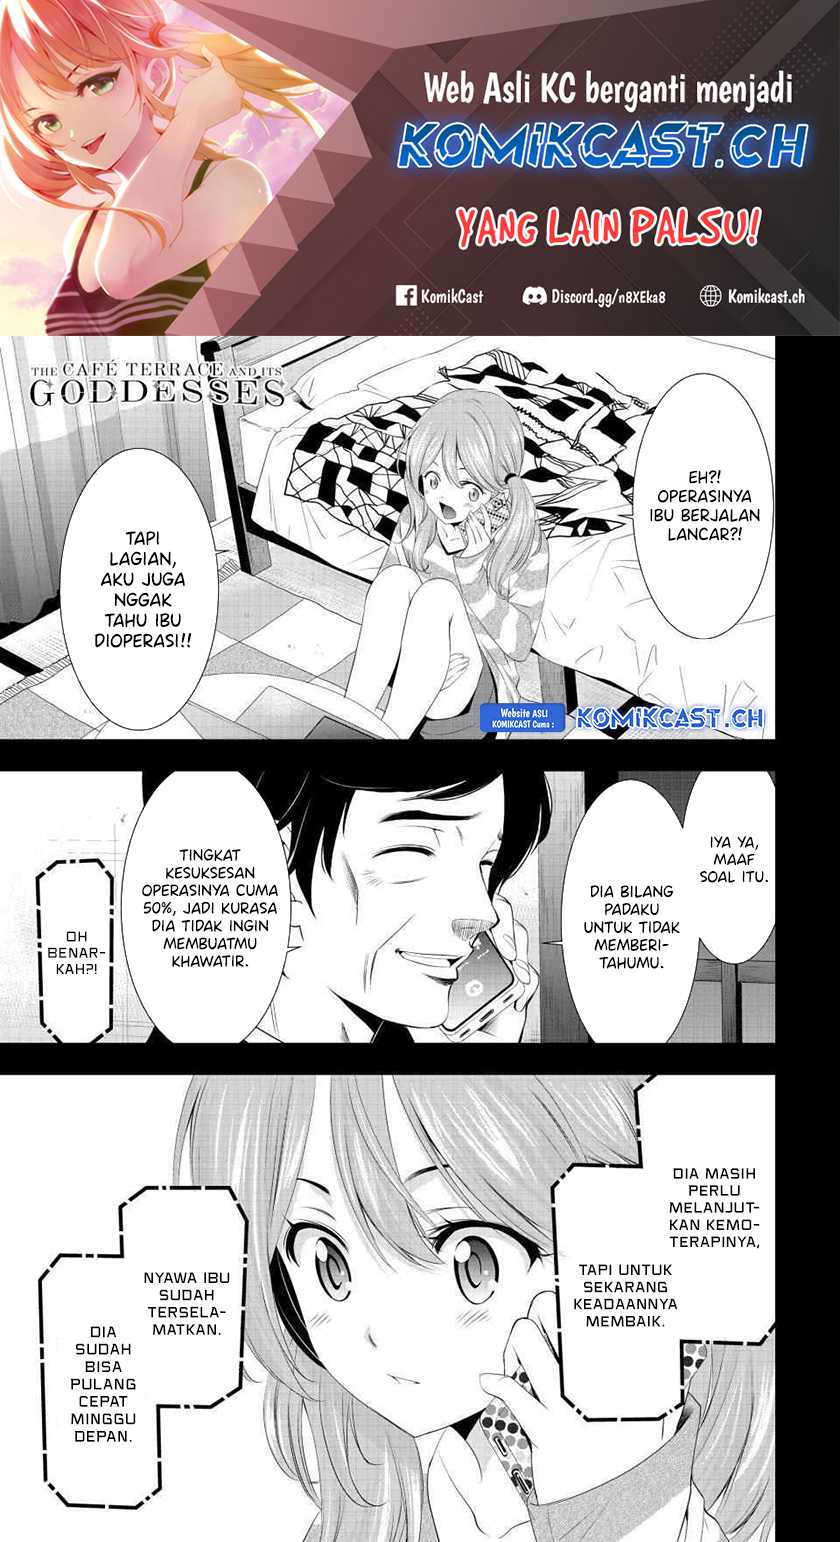 Megami no Kafeterasu (Goddess Café Terrace) Chapter 120